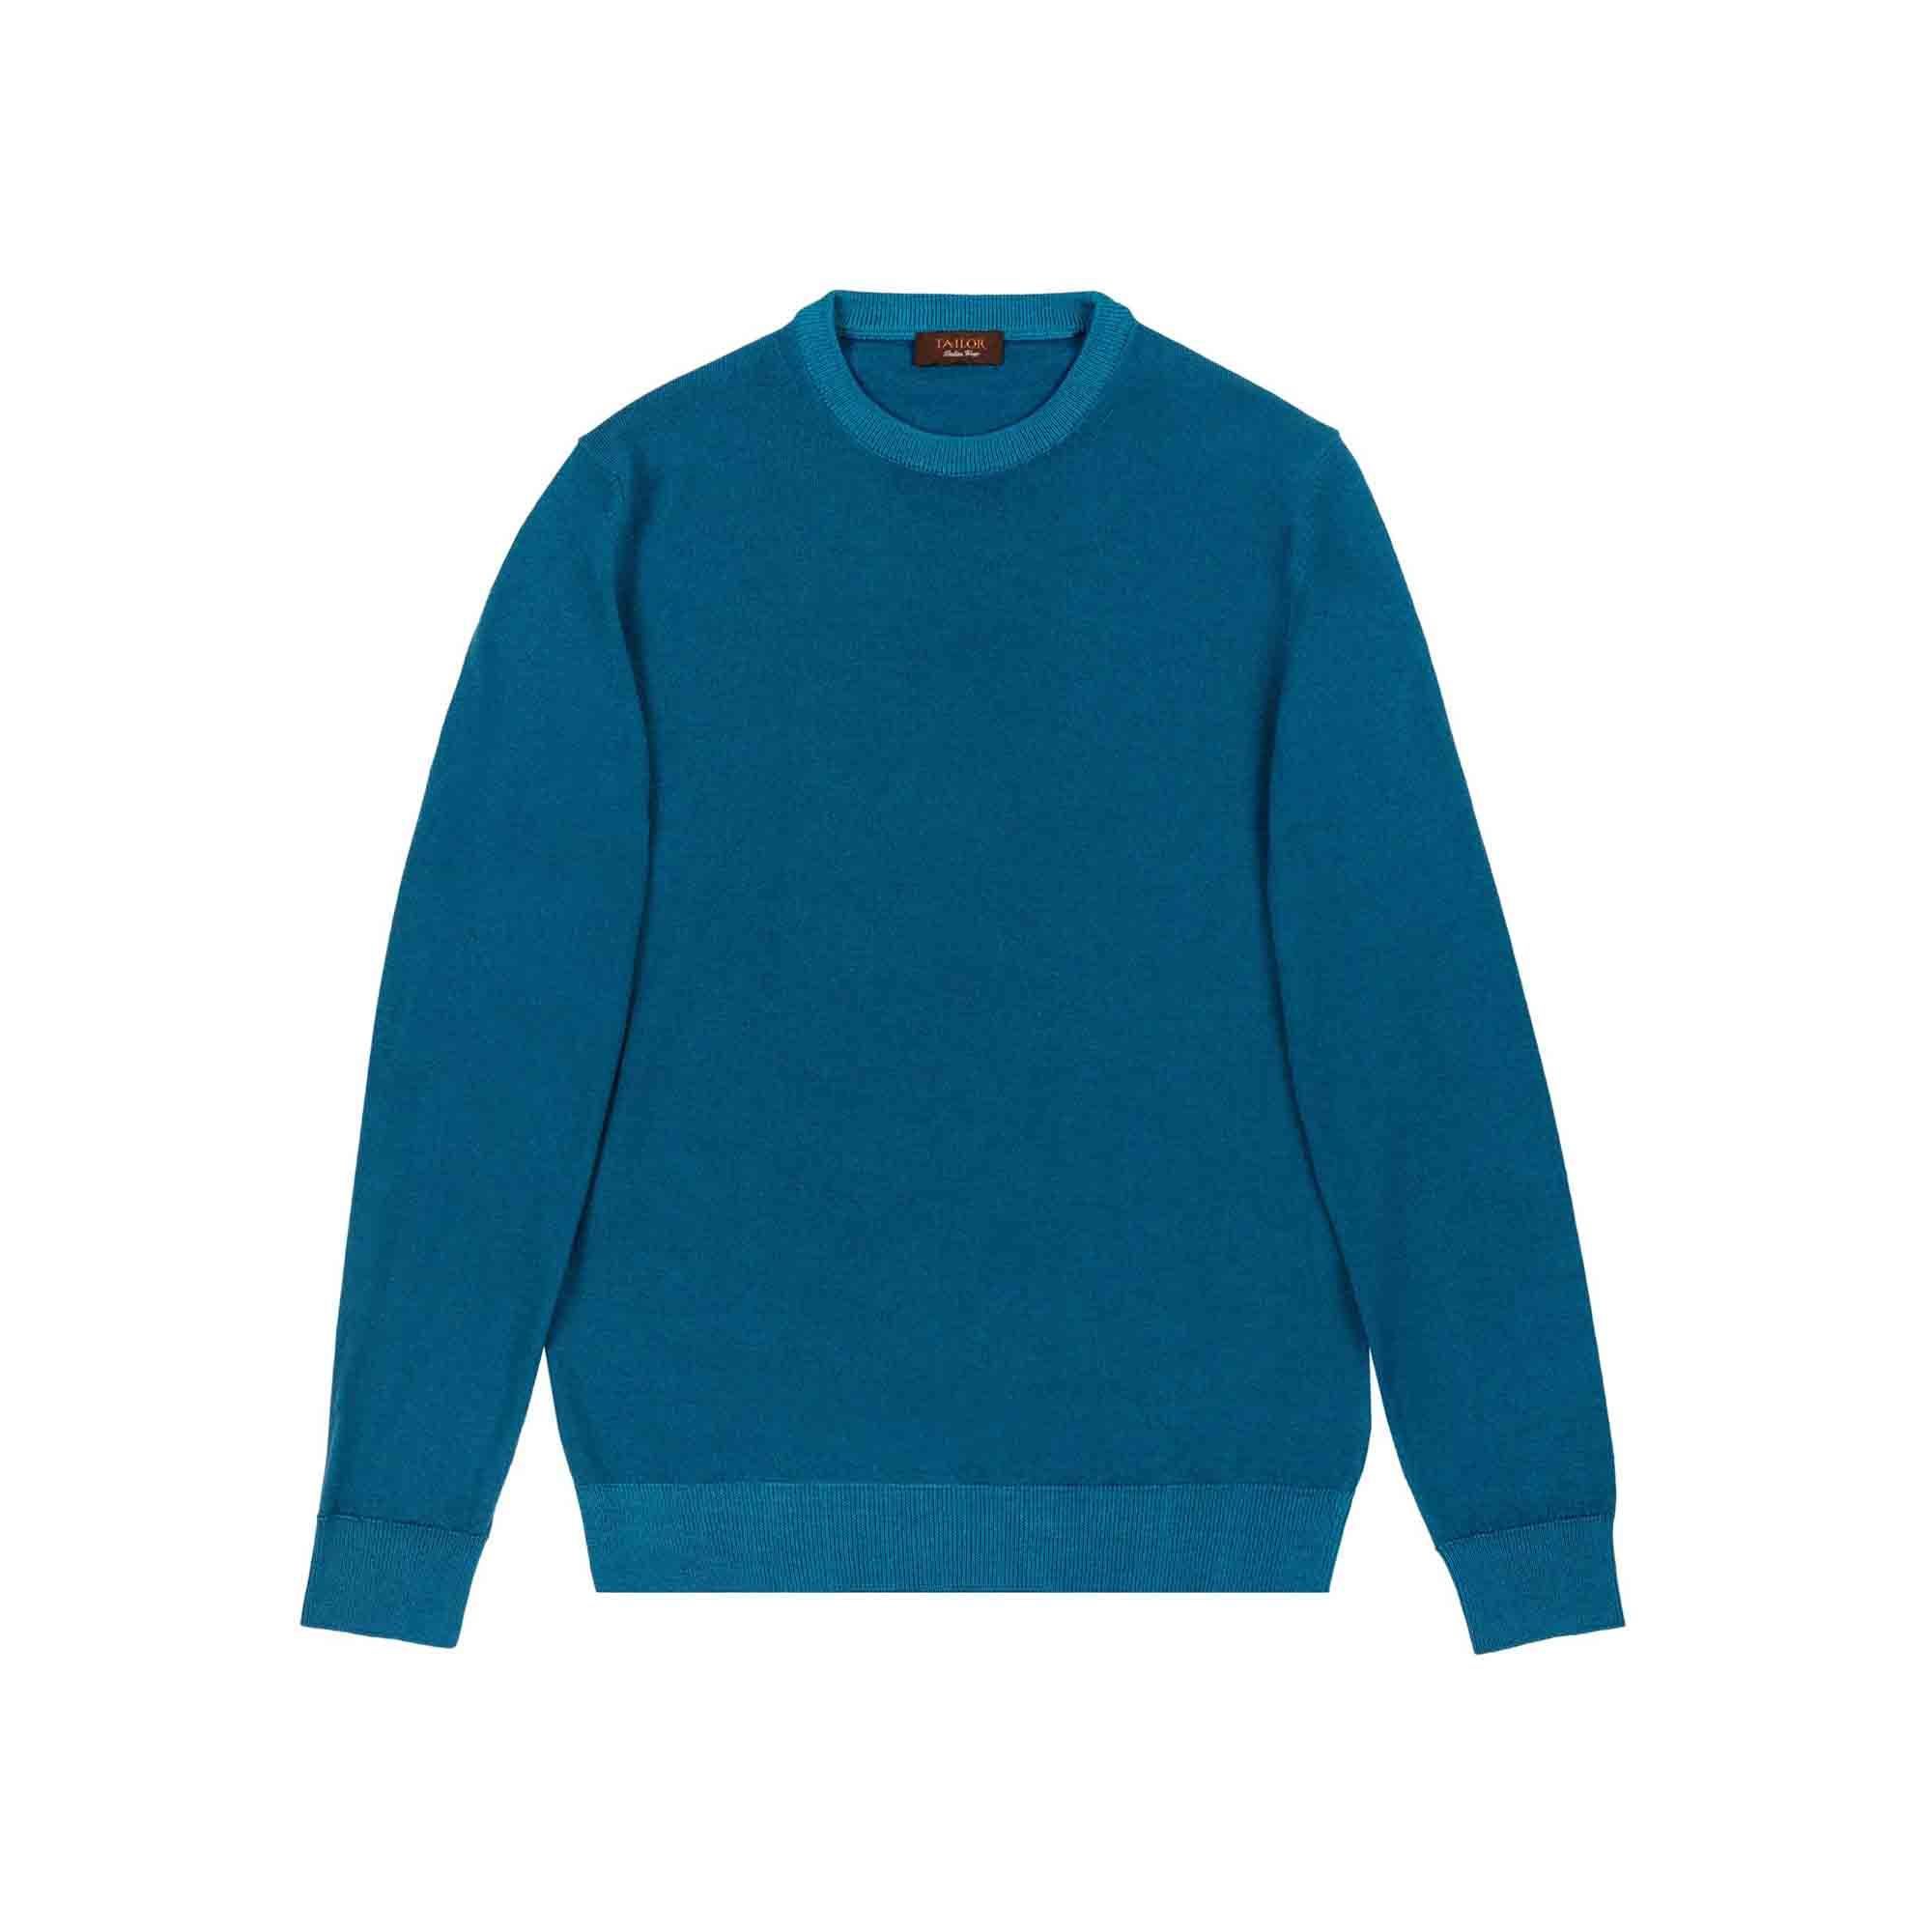 Turquoise Wool Crewneck Sweater